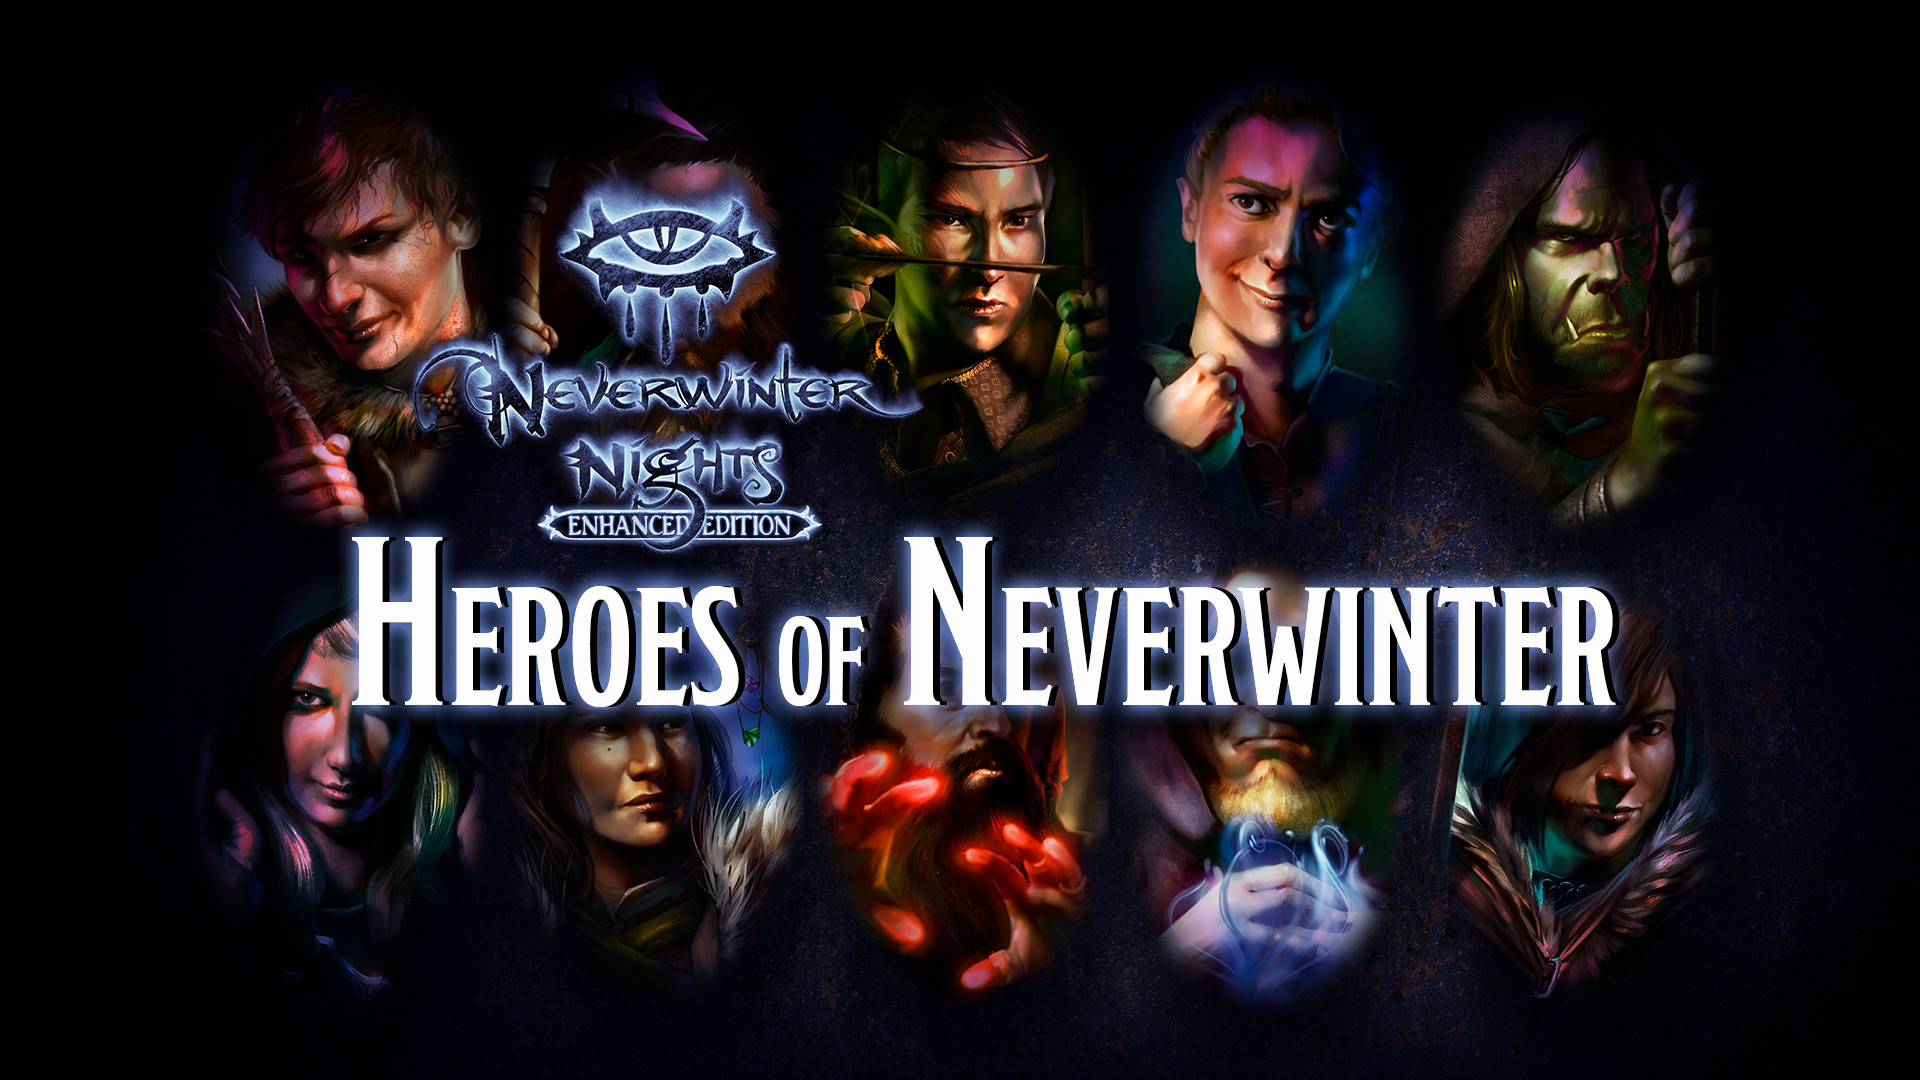 [$ 5.64] Neverwinter Nights: Enhanced Edition - Heroes of Neverwinter DLC Steam CD Key